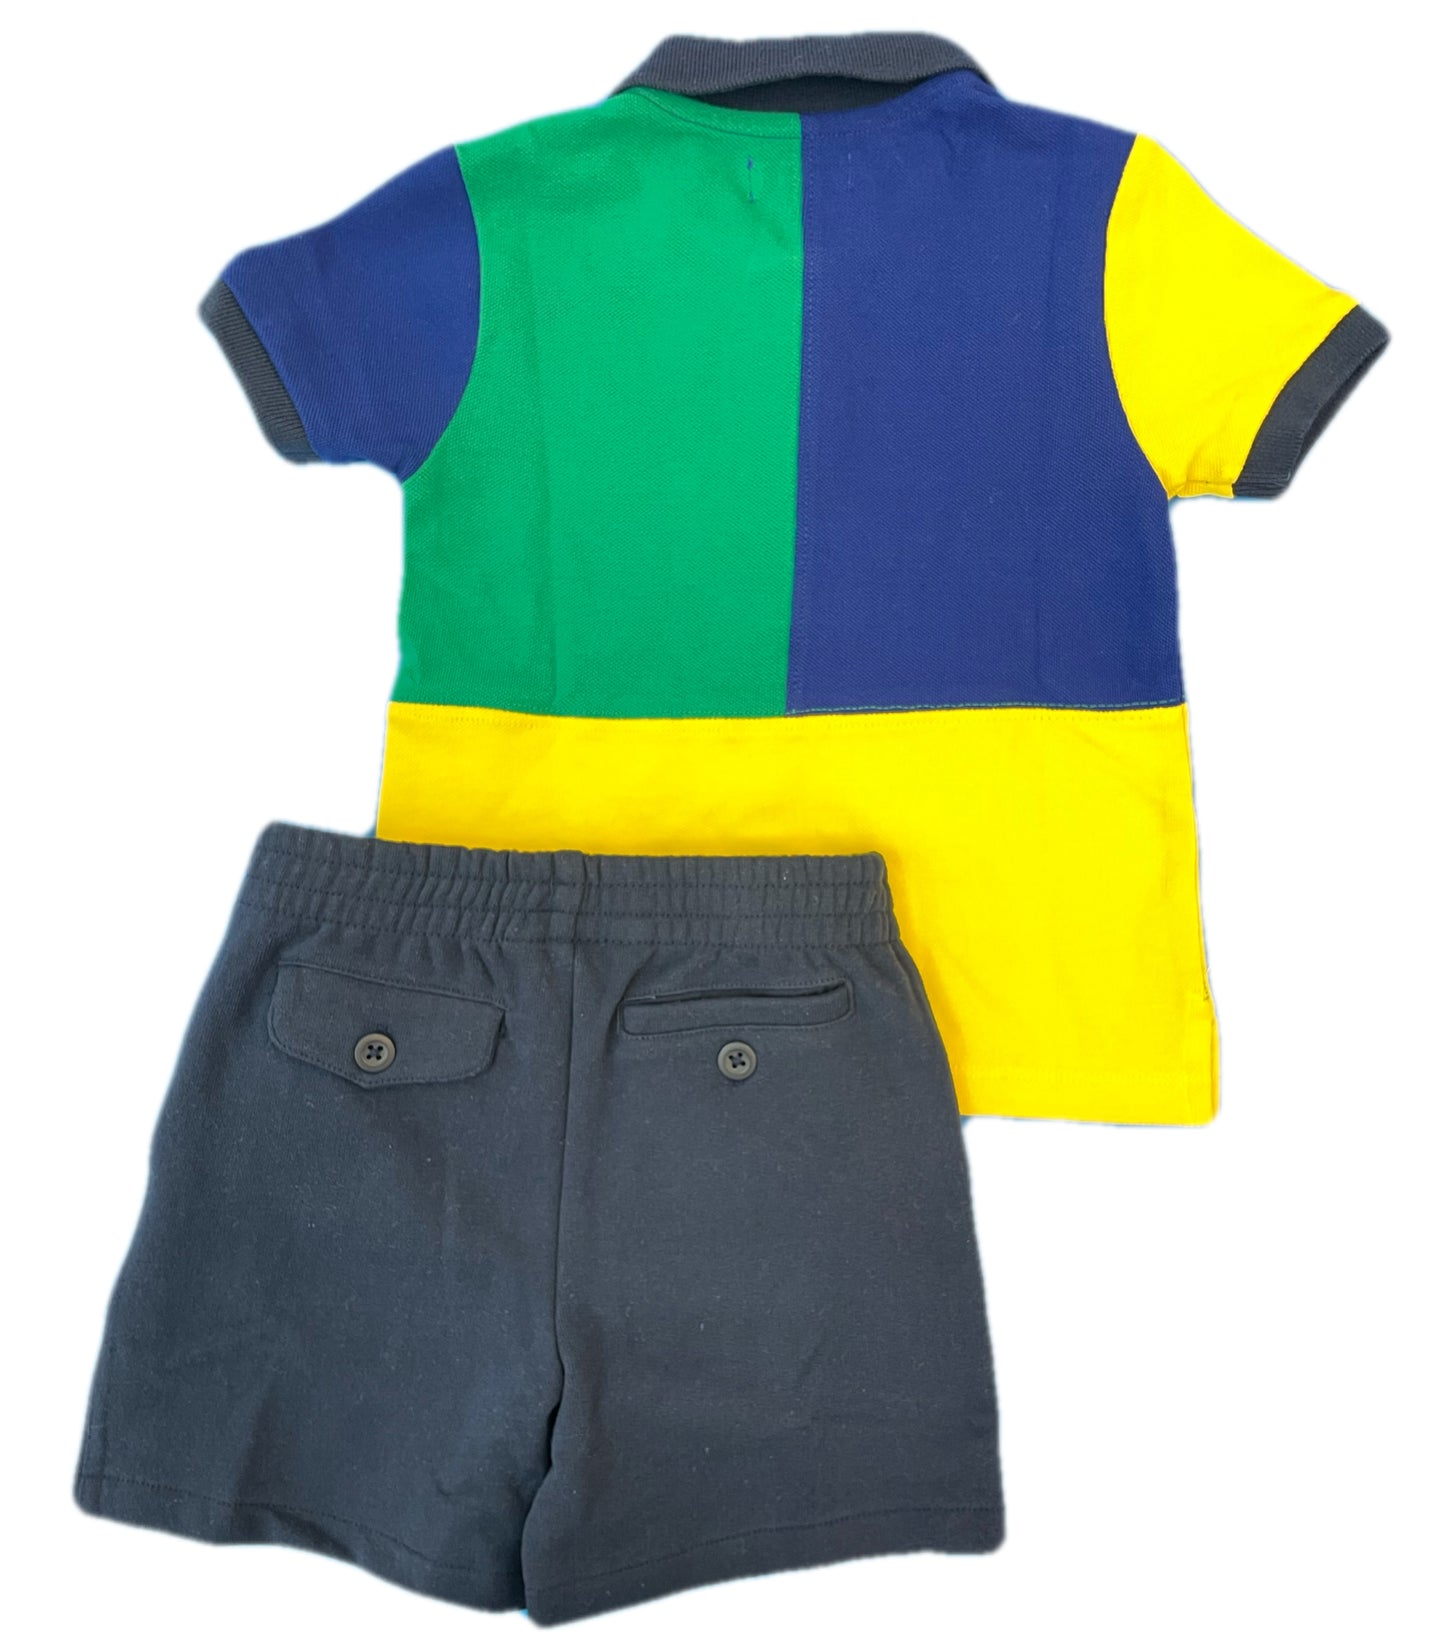 Polo Boys shirt and shorts set